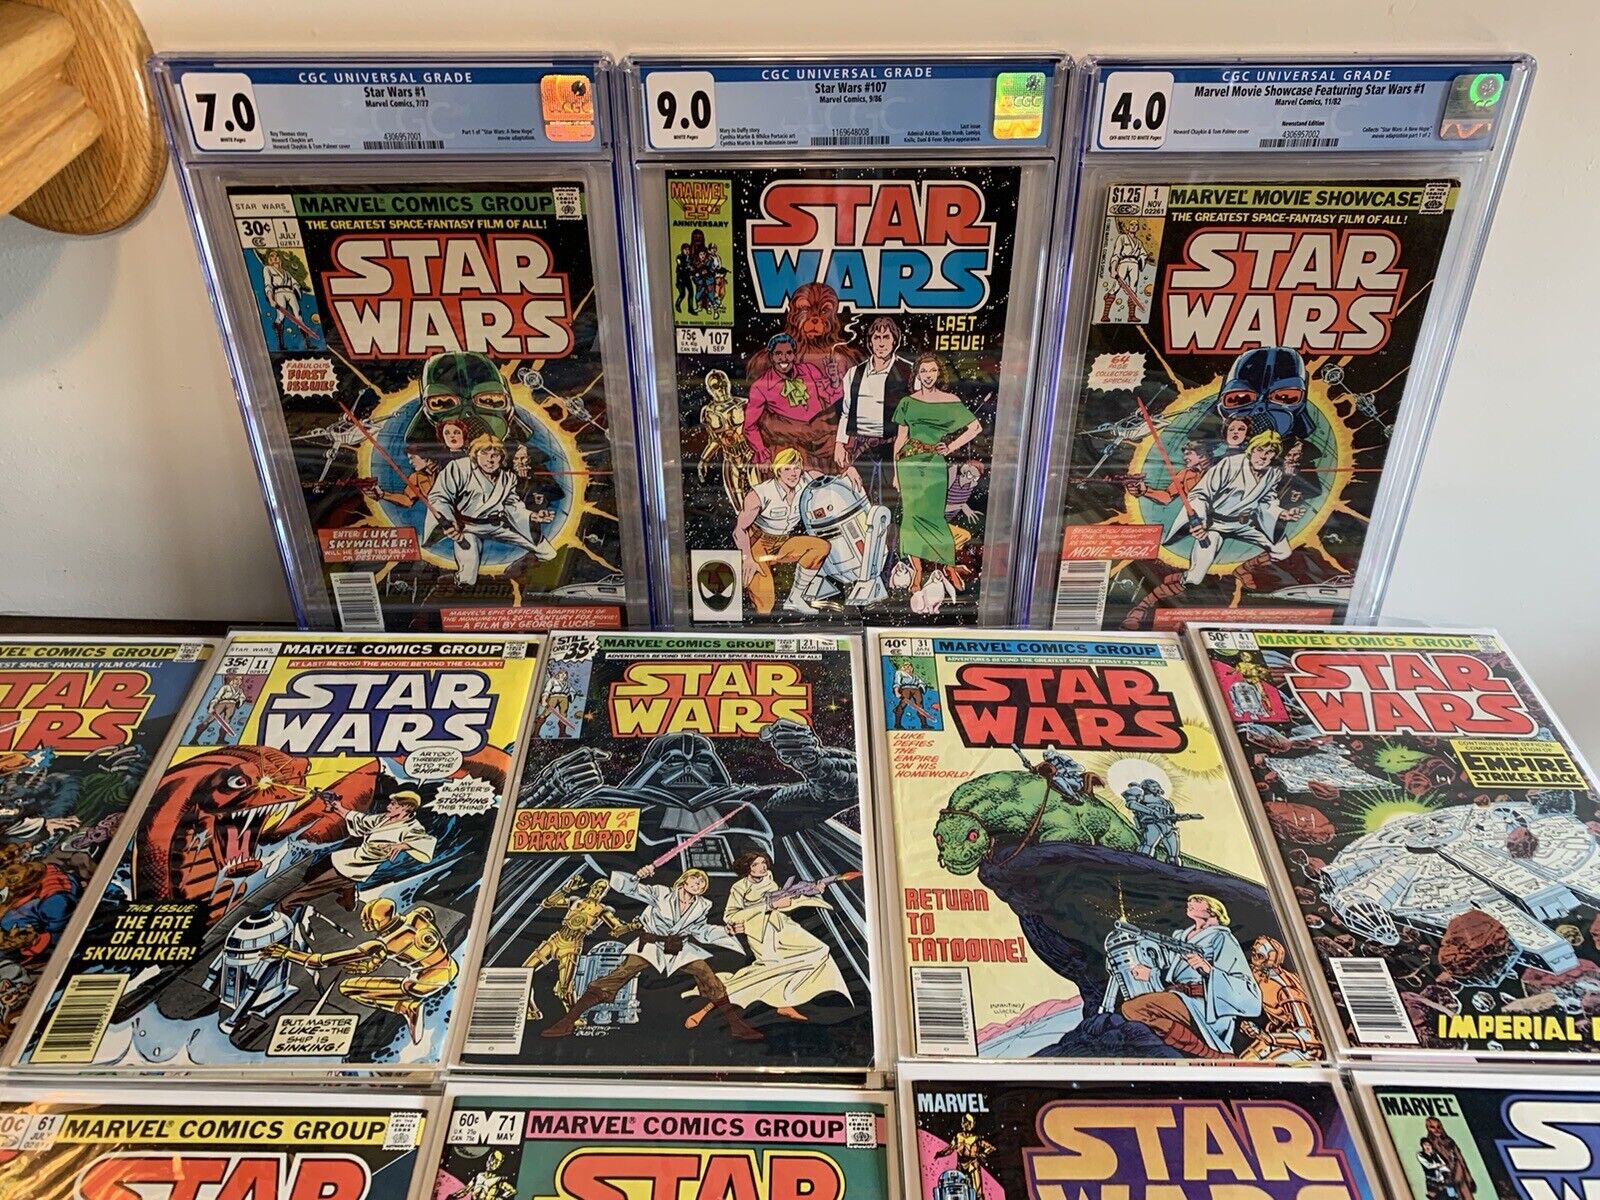 Star Wars 1977 Comic Book #1-107 Set Complete Run CGC 9.0 + Bonus RotJ Annual